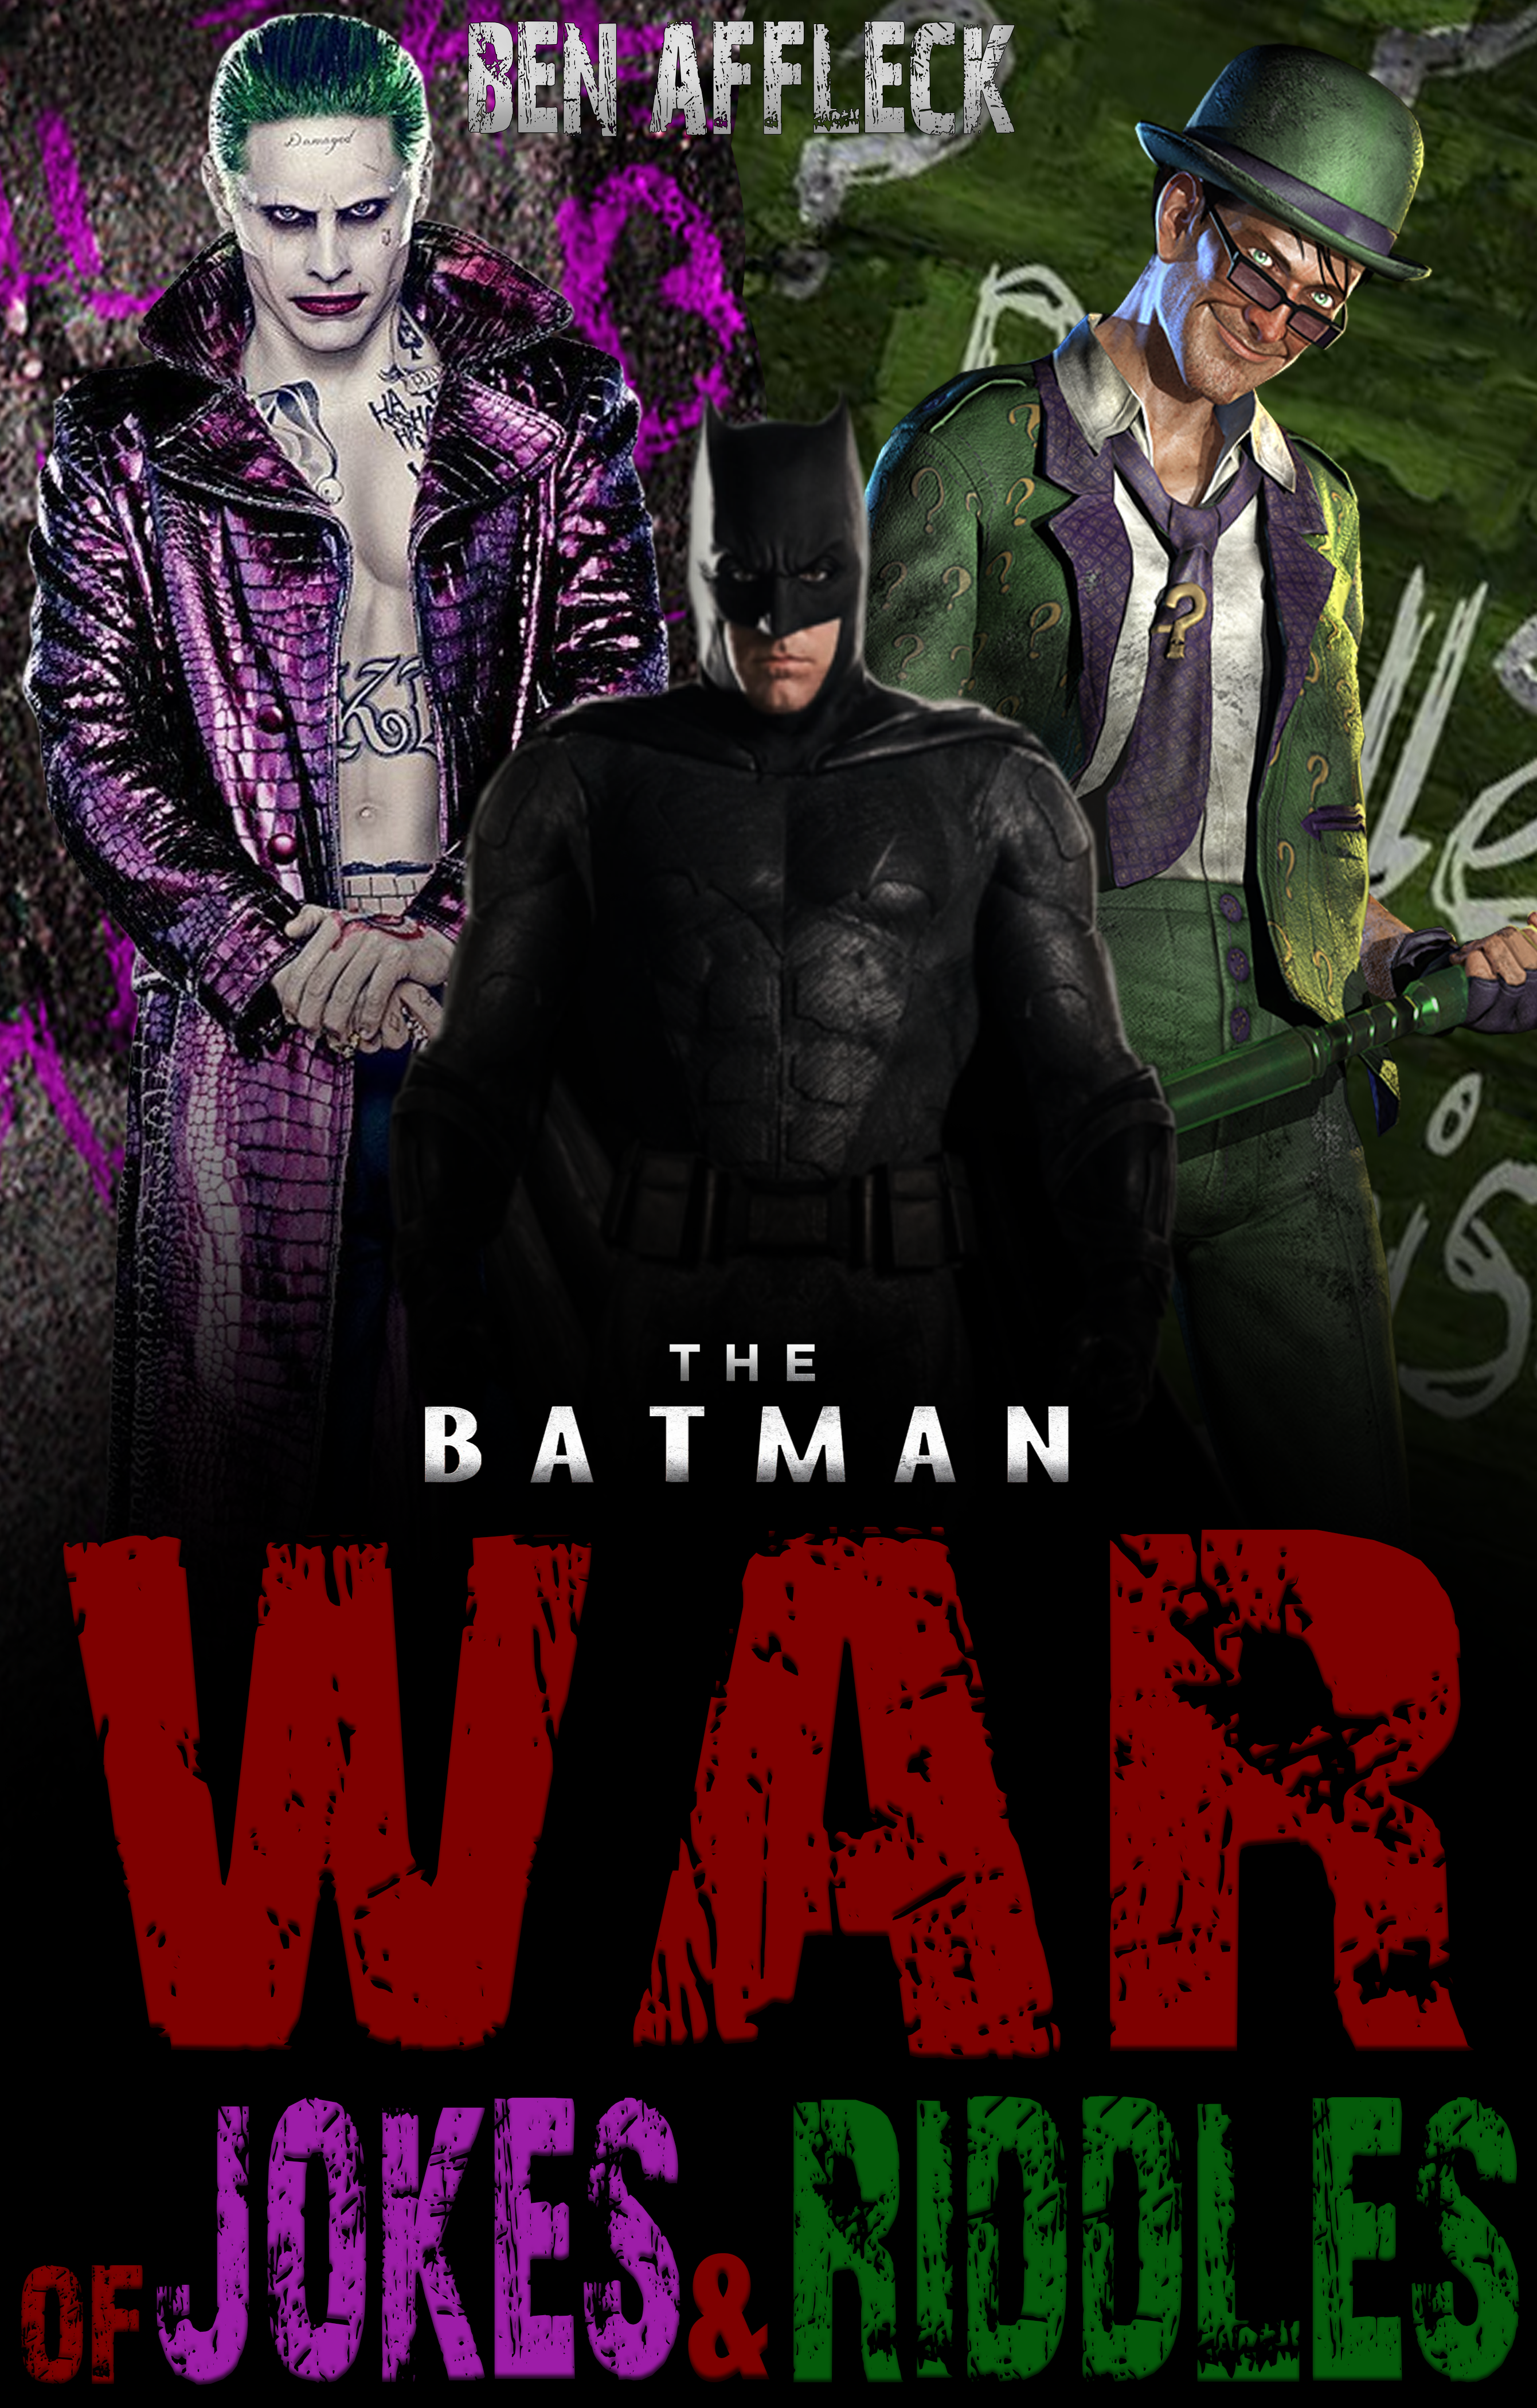 The Batman - The War of Jokes and Riddles Poster by Daviddv1202 on  DeviantArt